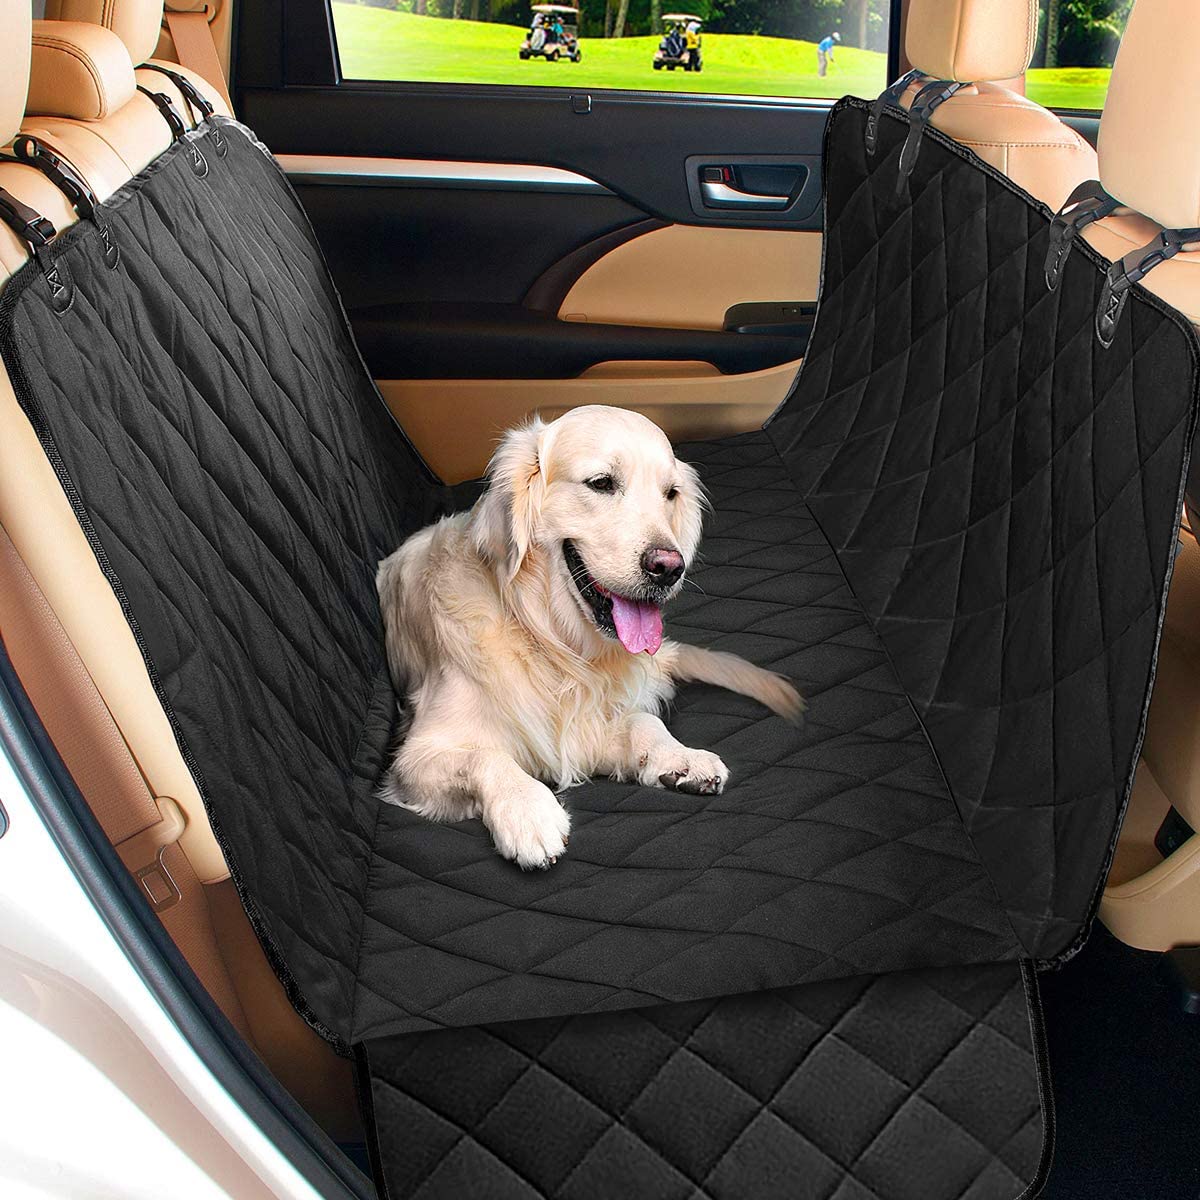 Dog Car Seat Cover Waterdicht Huisdier Hangmat Voor Honden In De Auto Hond Auto Accessoires Trunk Cover Matten Hond Auto achter Back Protector